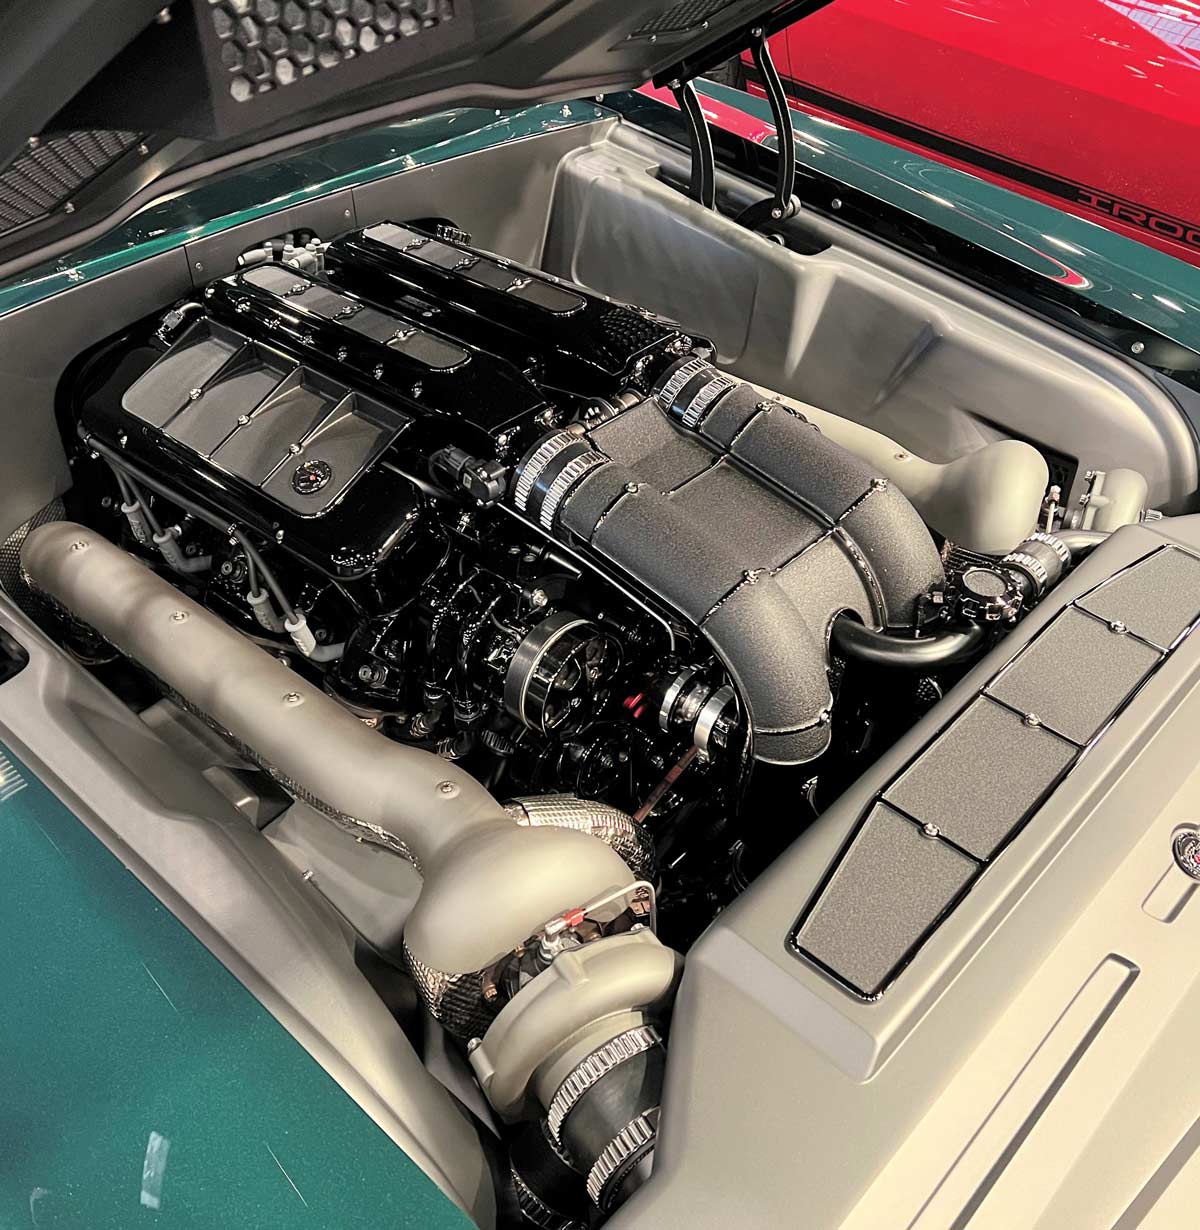 482ci twin-turbo Butler Performance Pontiac V-8